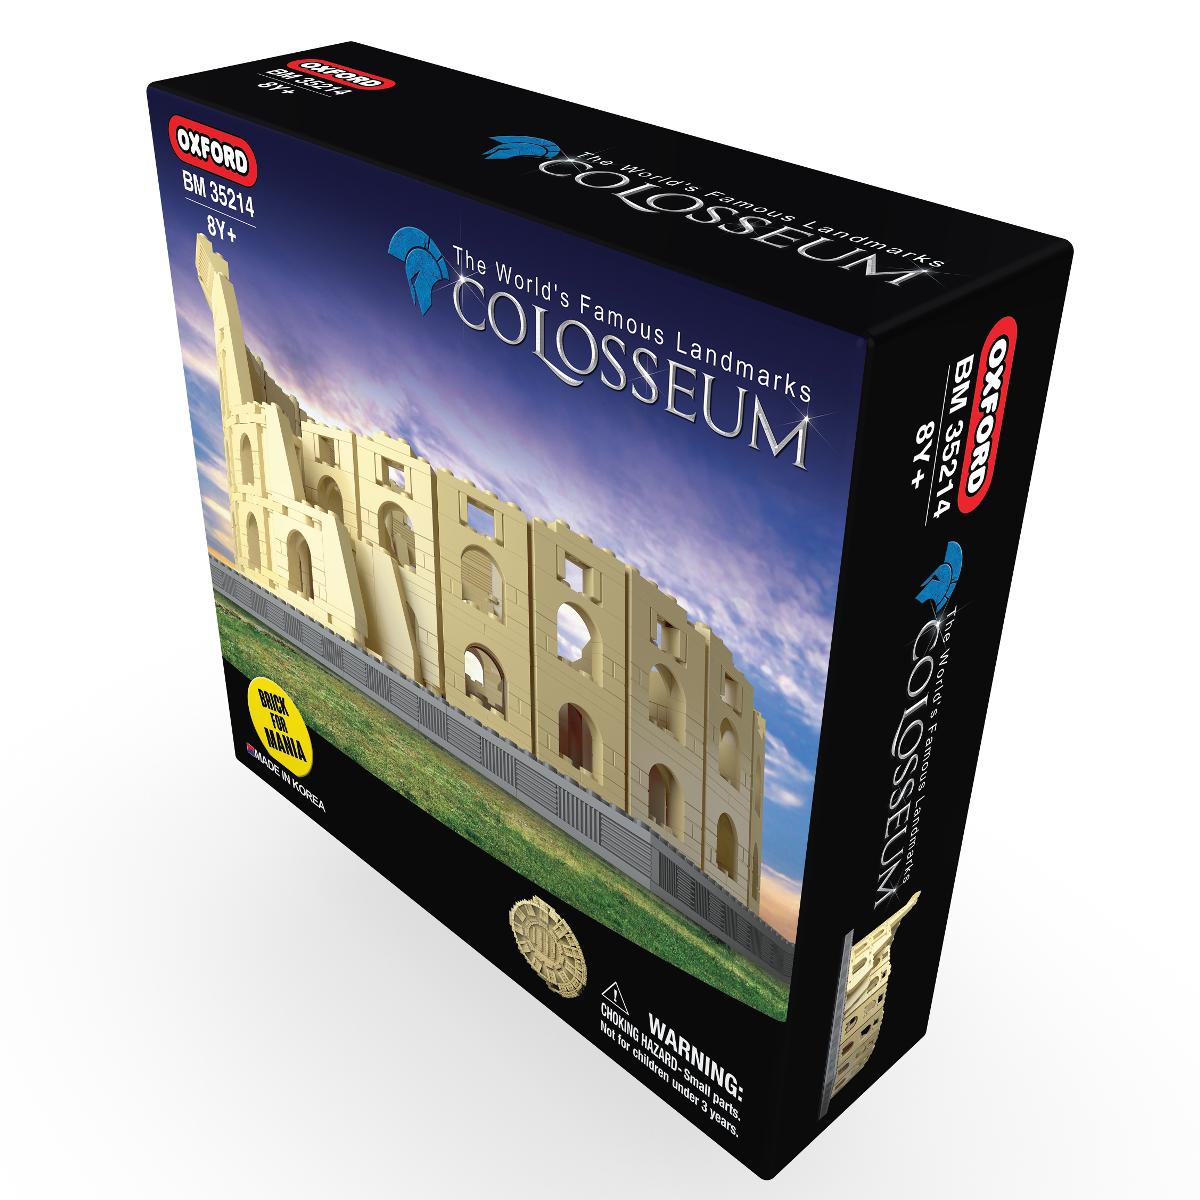 Oxford Colosseum Compatible Brick Set